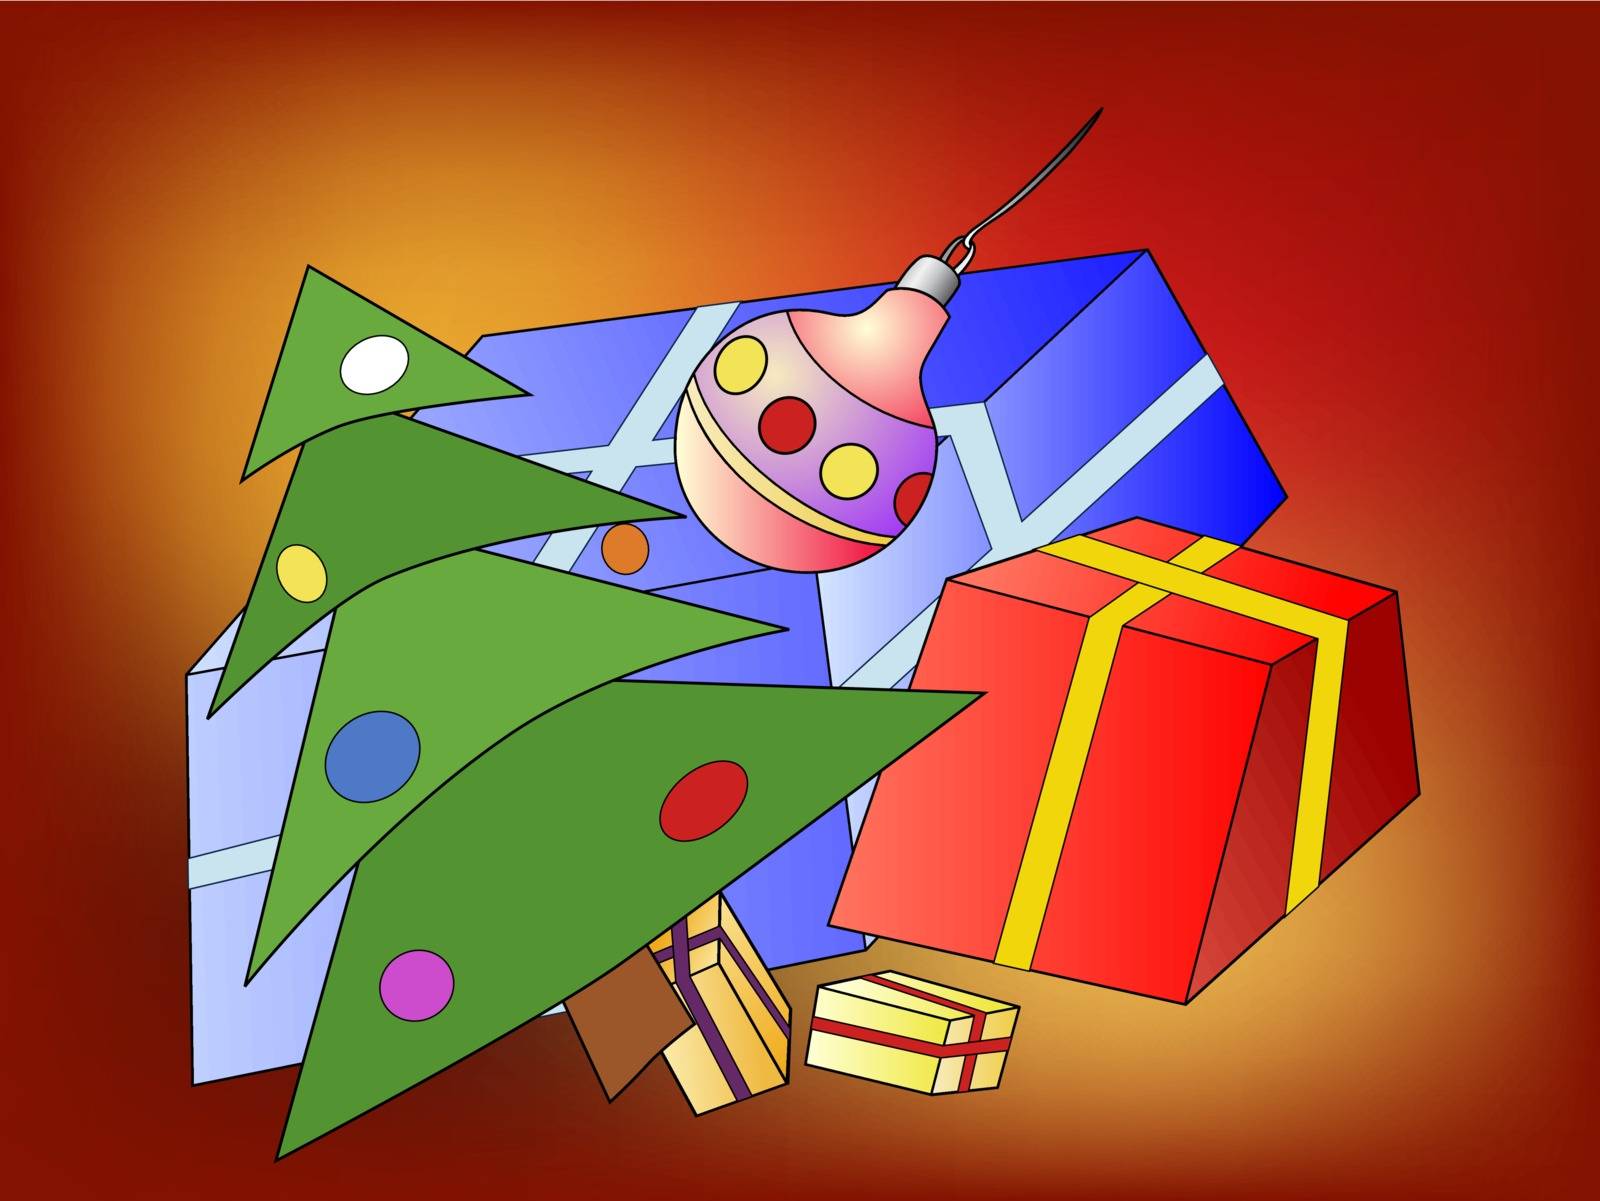 Illustration of the Christmas tree and Christmas presents